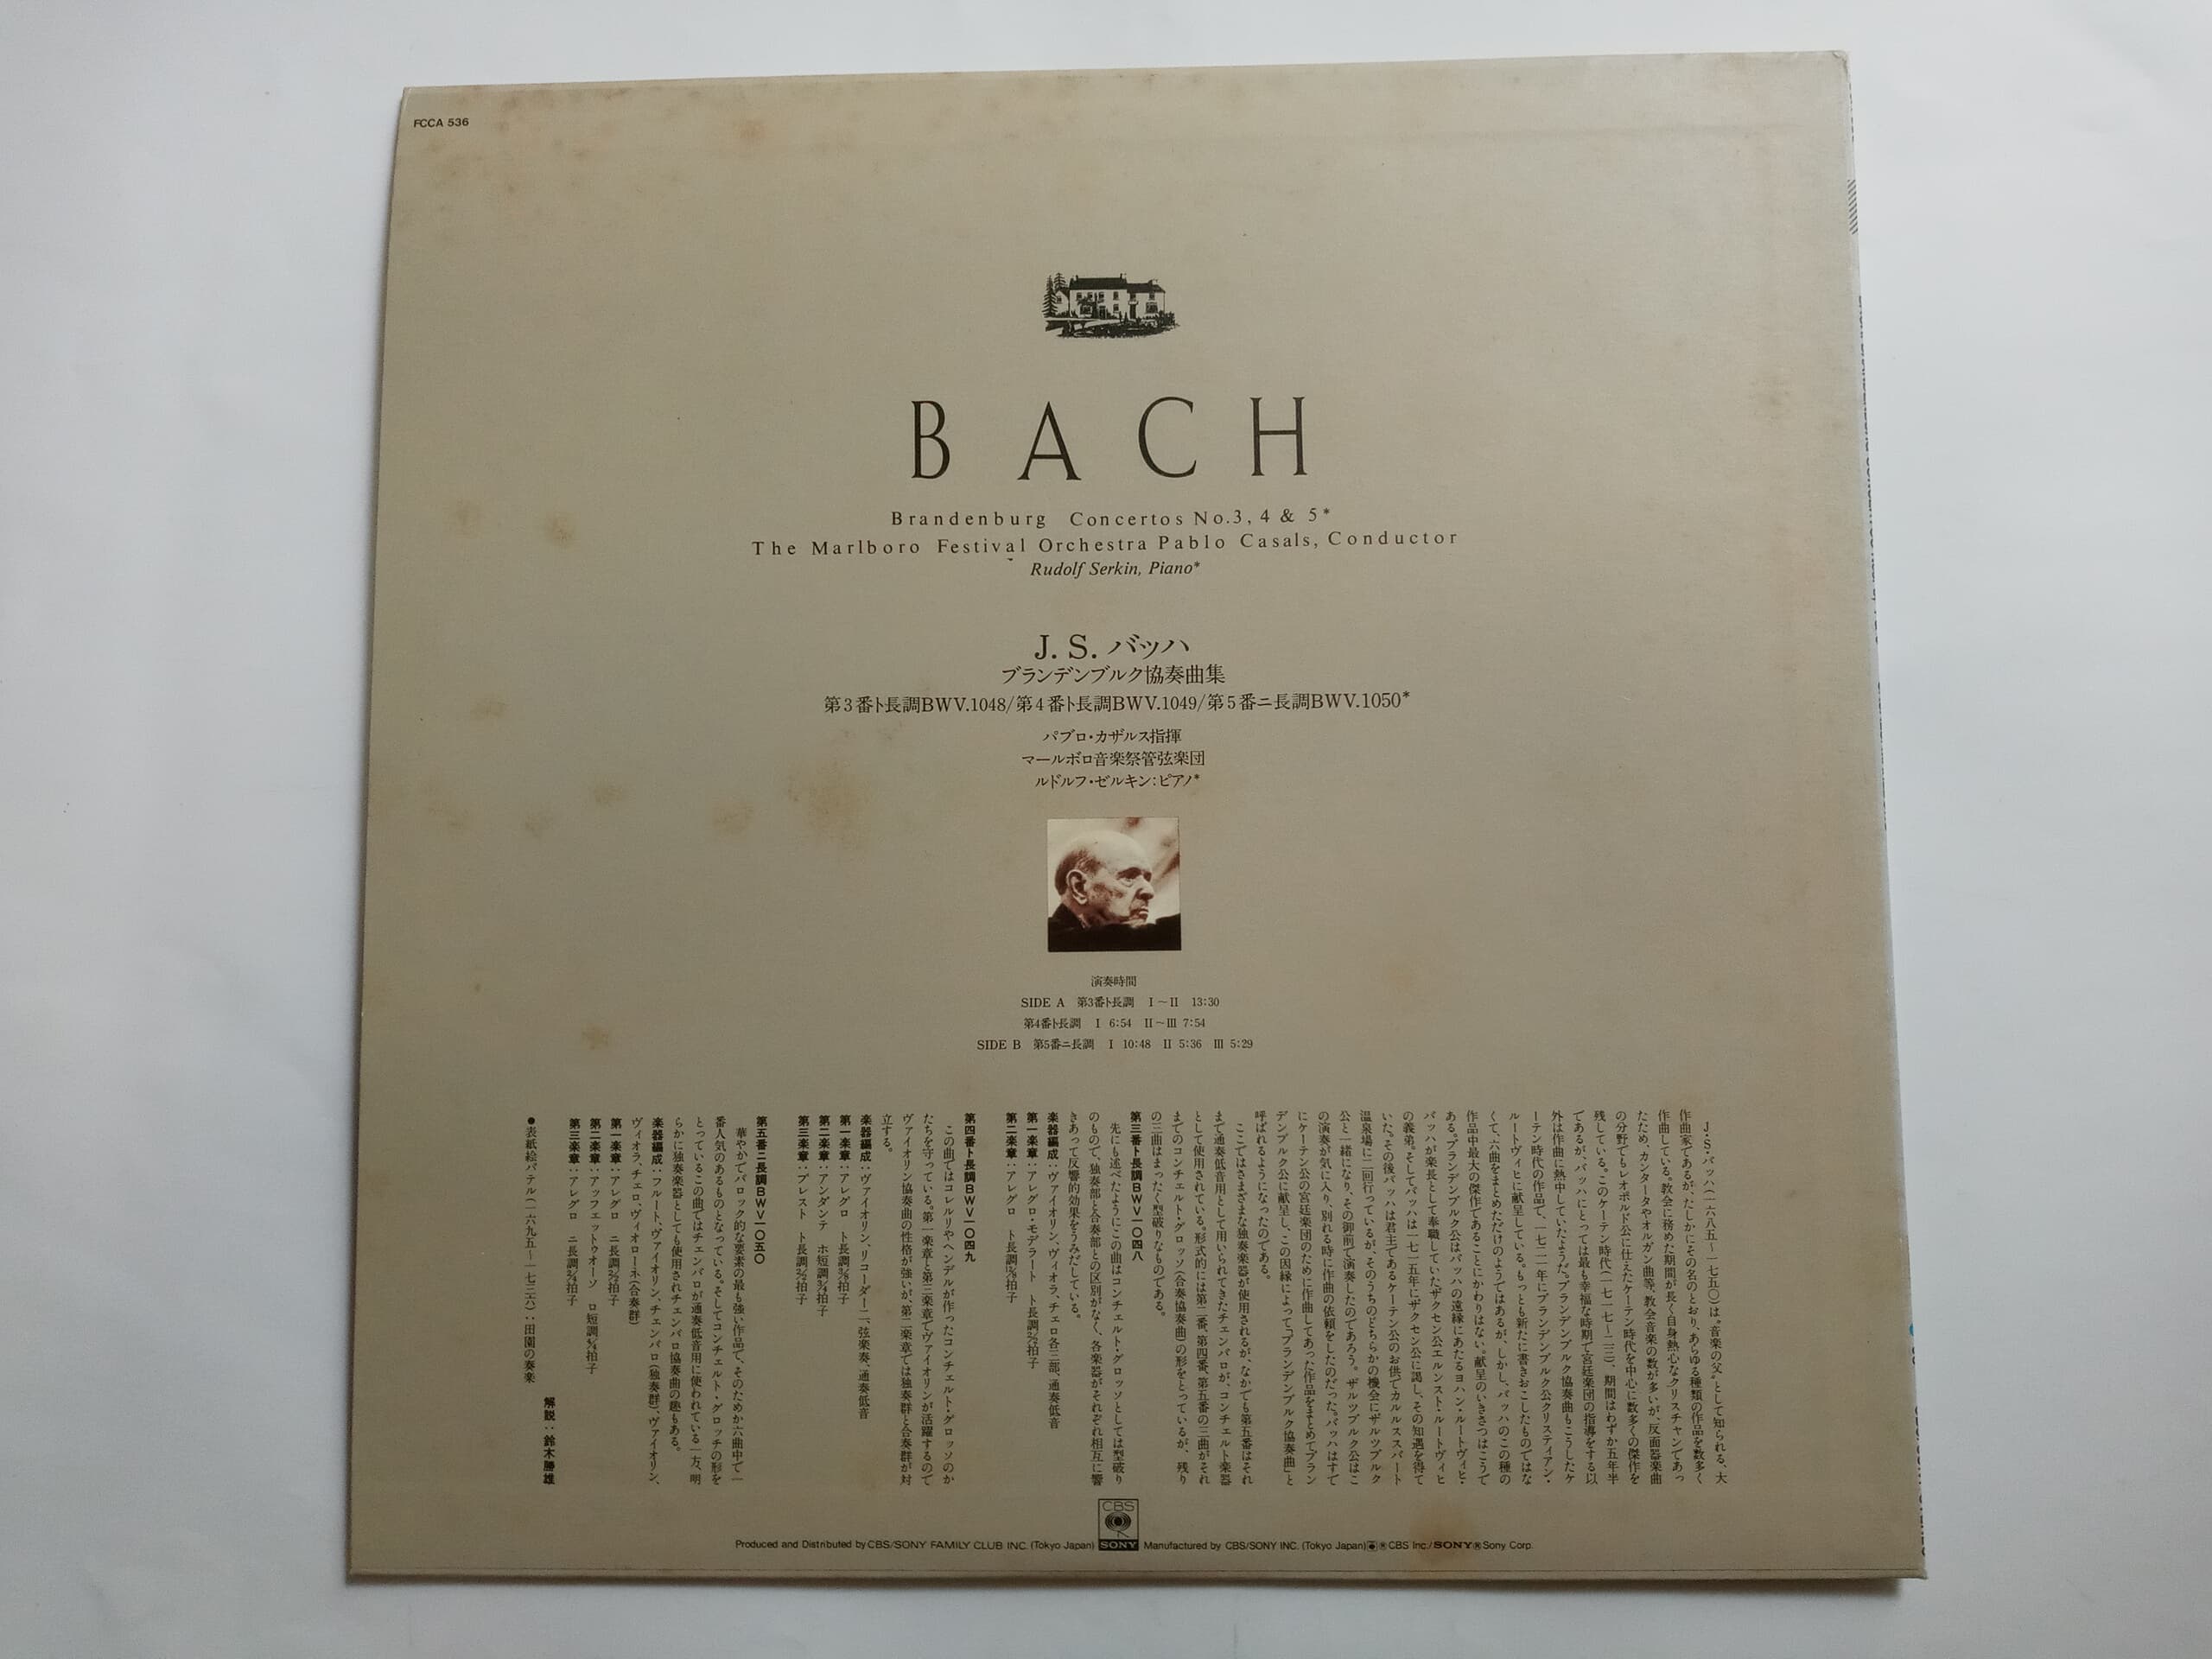 LP(수입) 바하: 브란덴부르크 협주곡 3~5번 - 루돌프 제르킨 / 파블로 카잘스/ 말보로음악제 관현악단